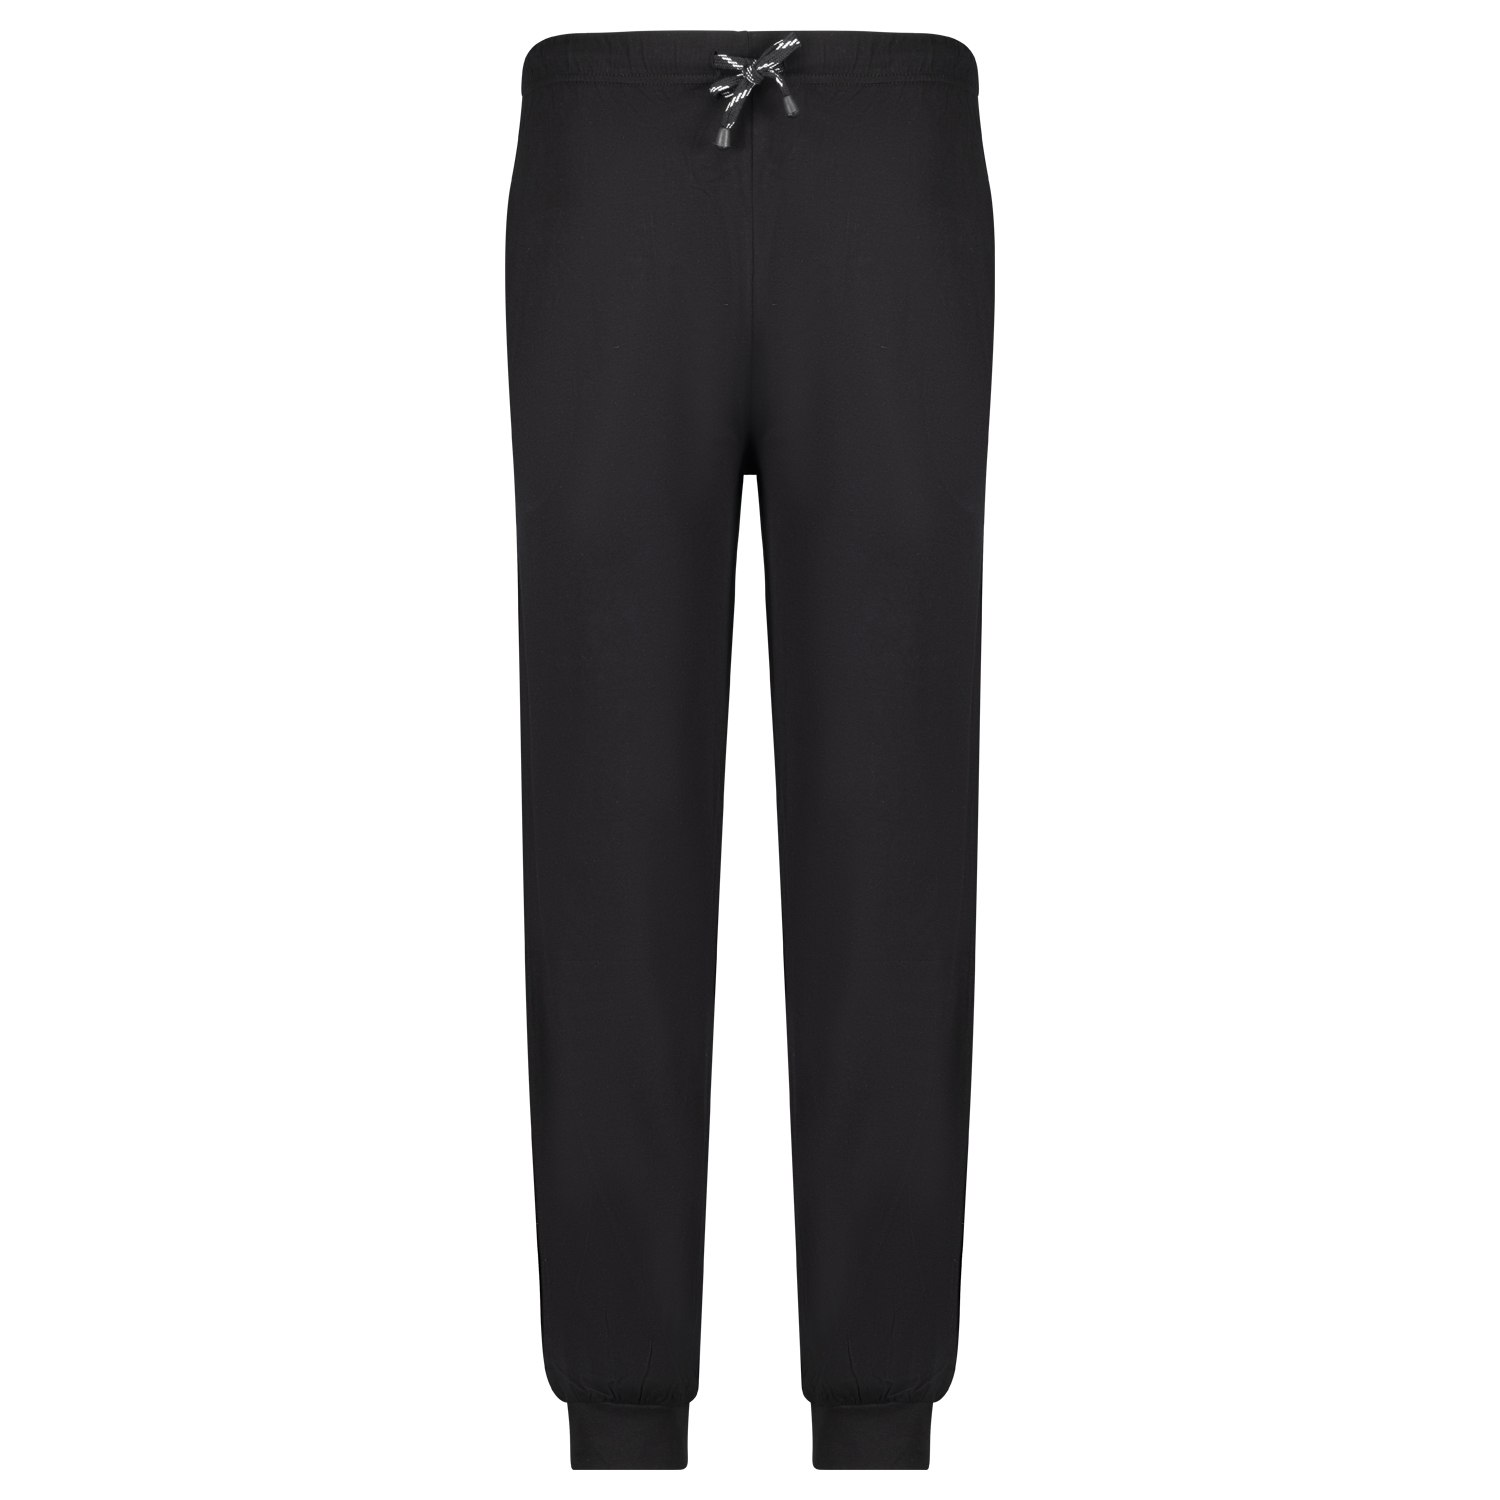 Long pyjama pants in black by ADAMO in oversizes up to 10XL